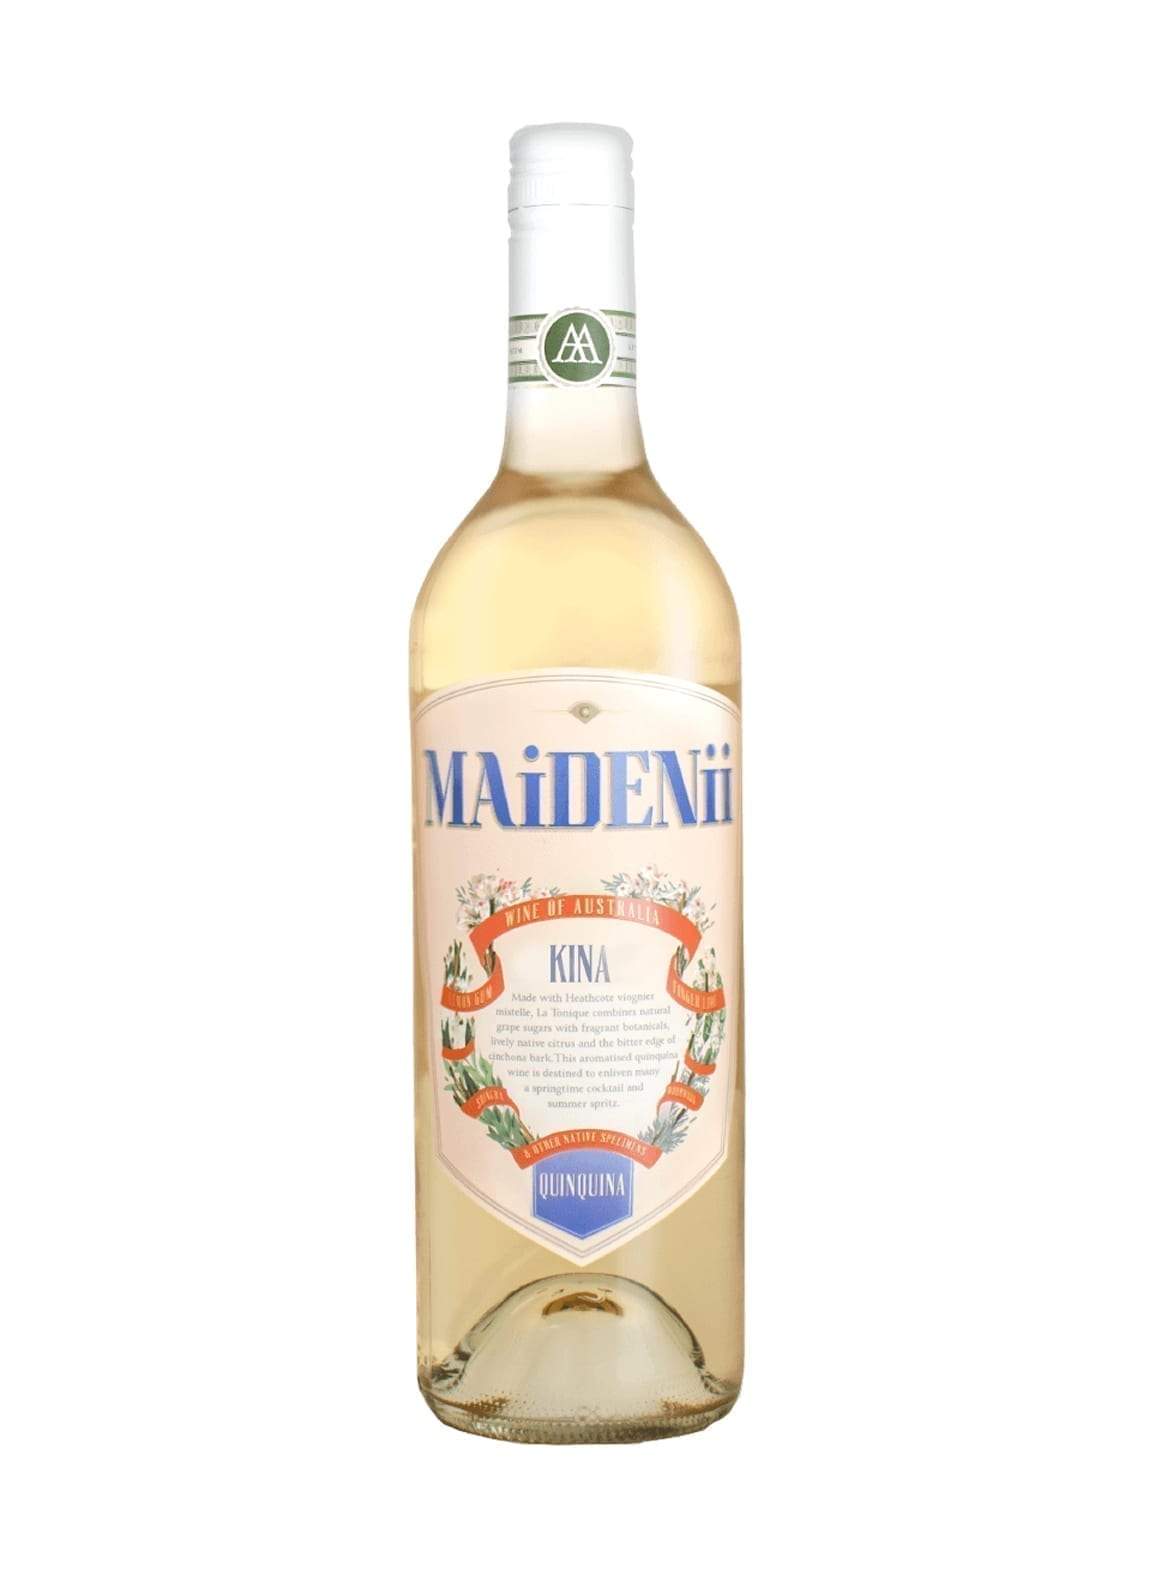 Maidenii Aperitif 'Kina' 17.5% 750ml | Liquor & Spirits | Shop online at Spirits of France